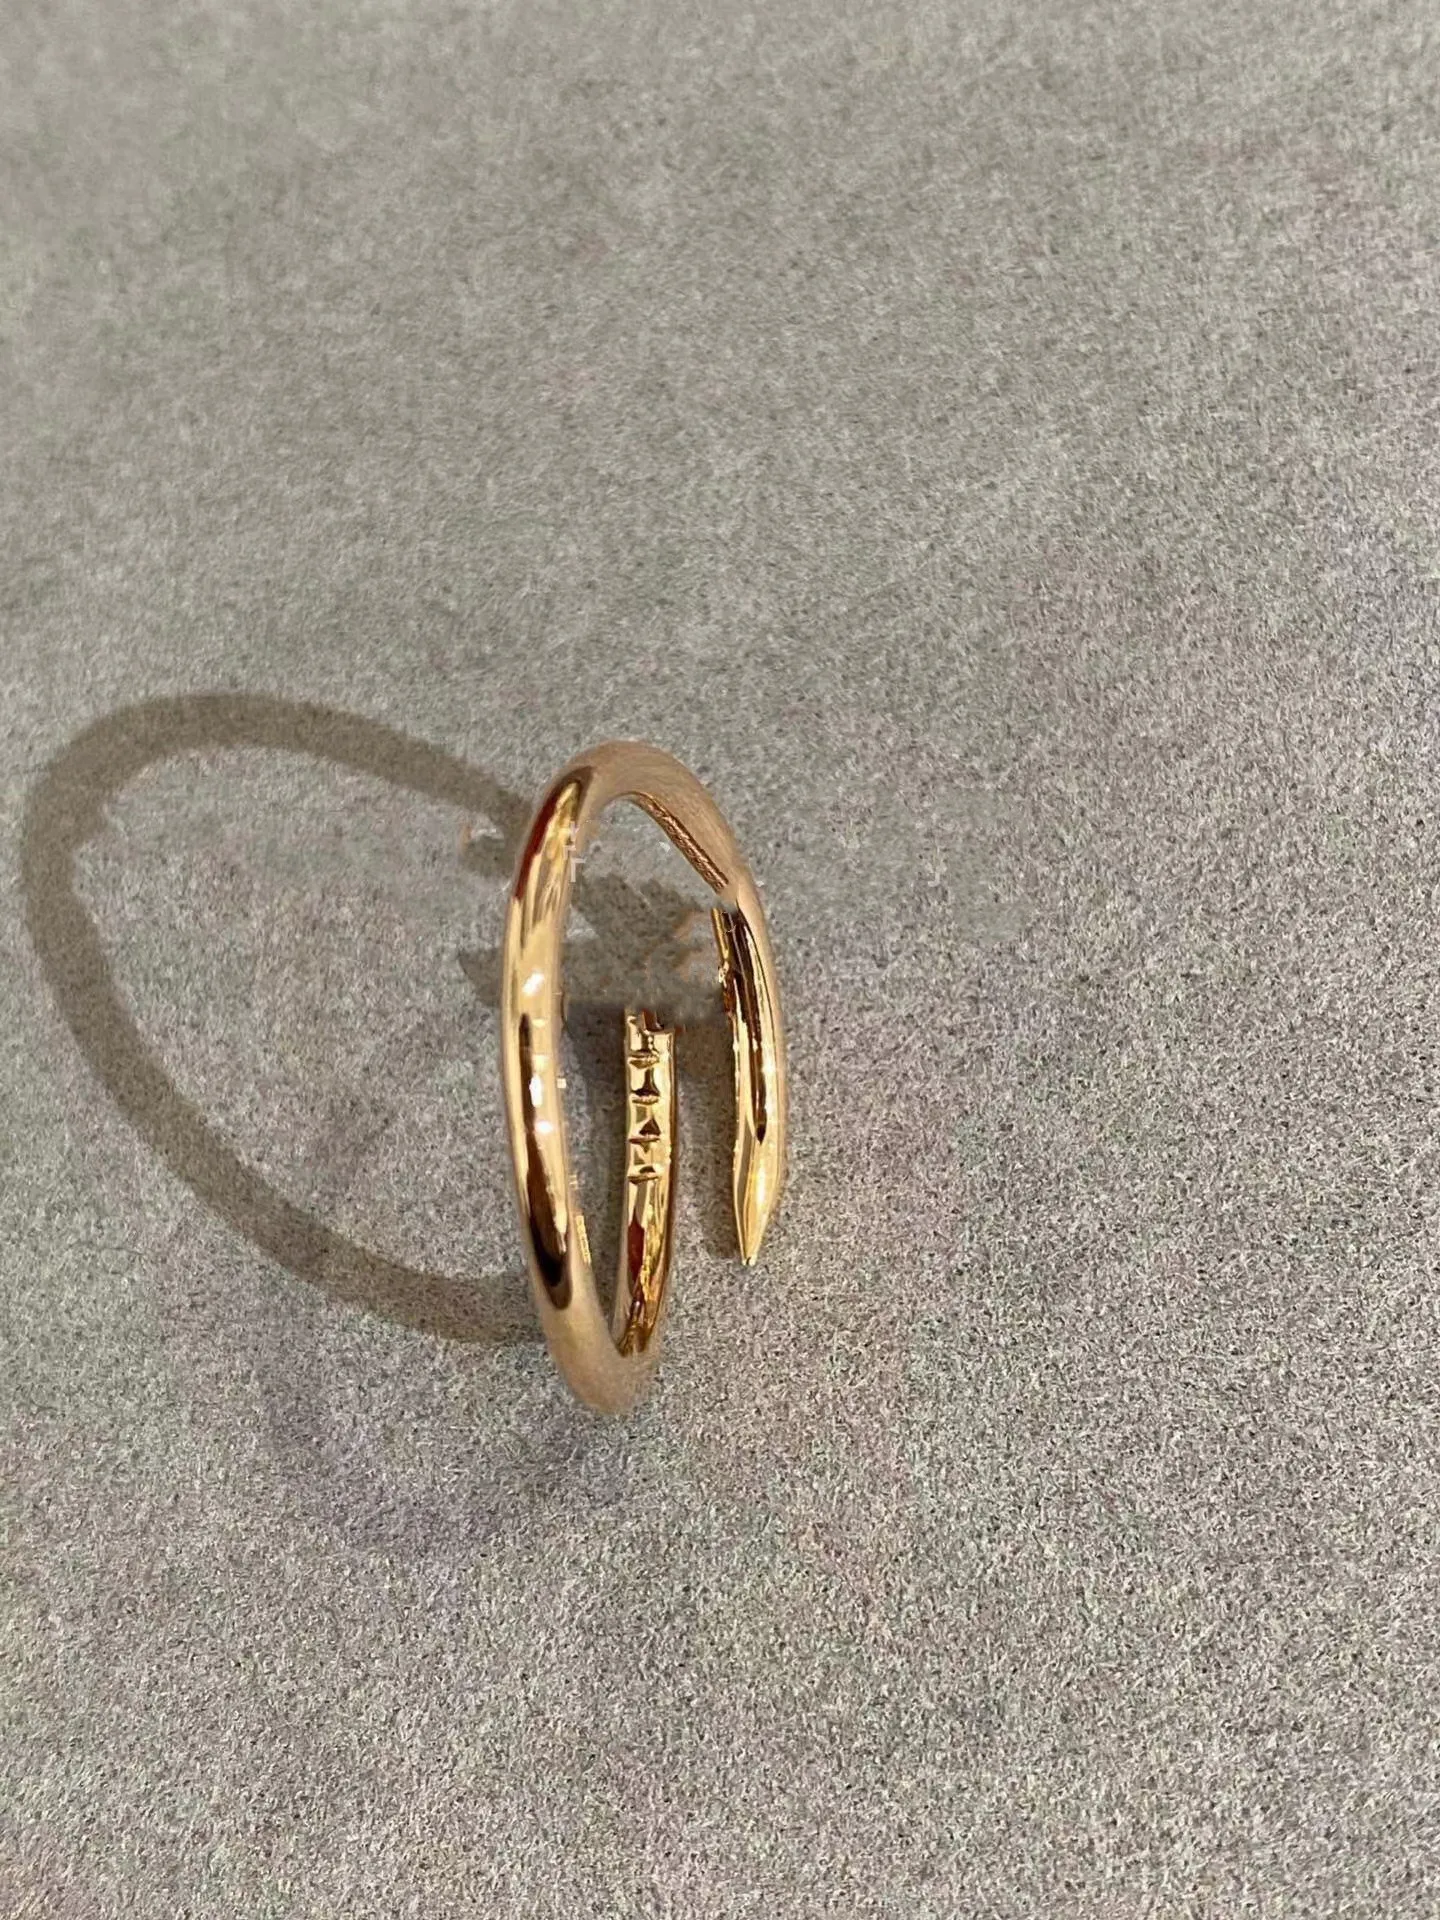 Designer Rose Gold Ring Dunne nagelring Top Kwaliteit Diamantring voor vrouw Man Electroplating 18K Classic Premium met doos